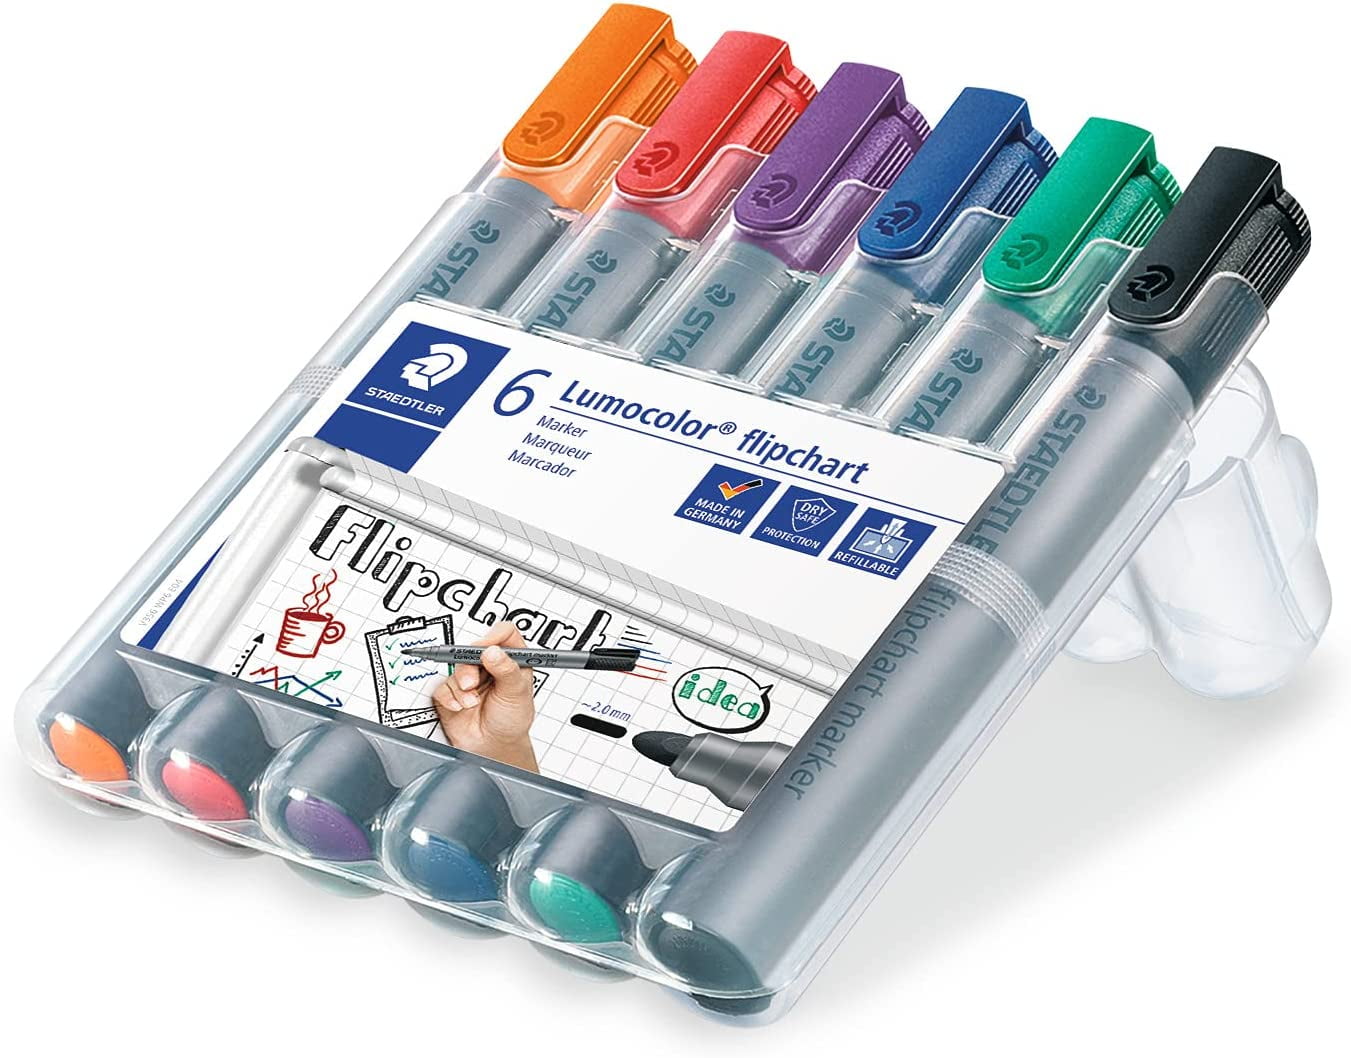 STAEDTLER 356 WP6 Lumocolor Flipchart Markers - Assorted Colours